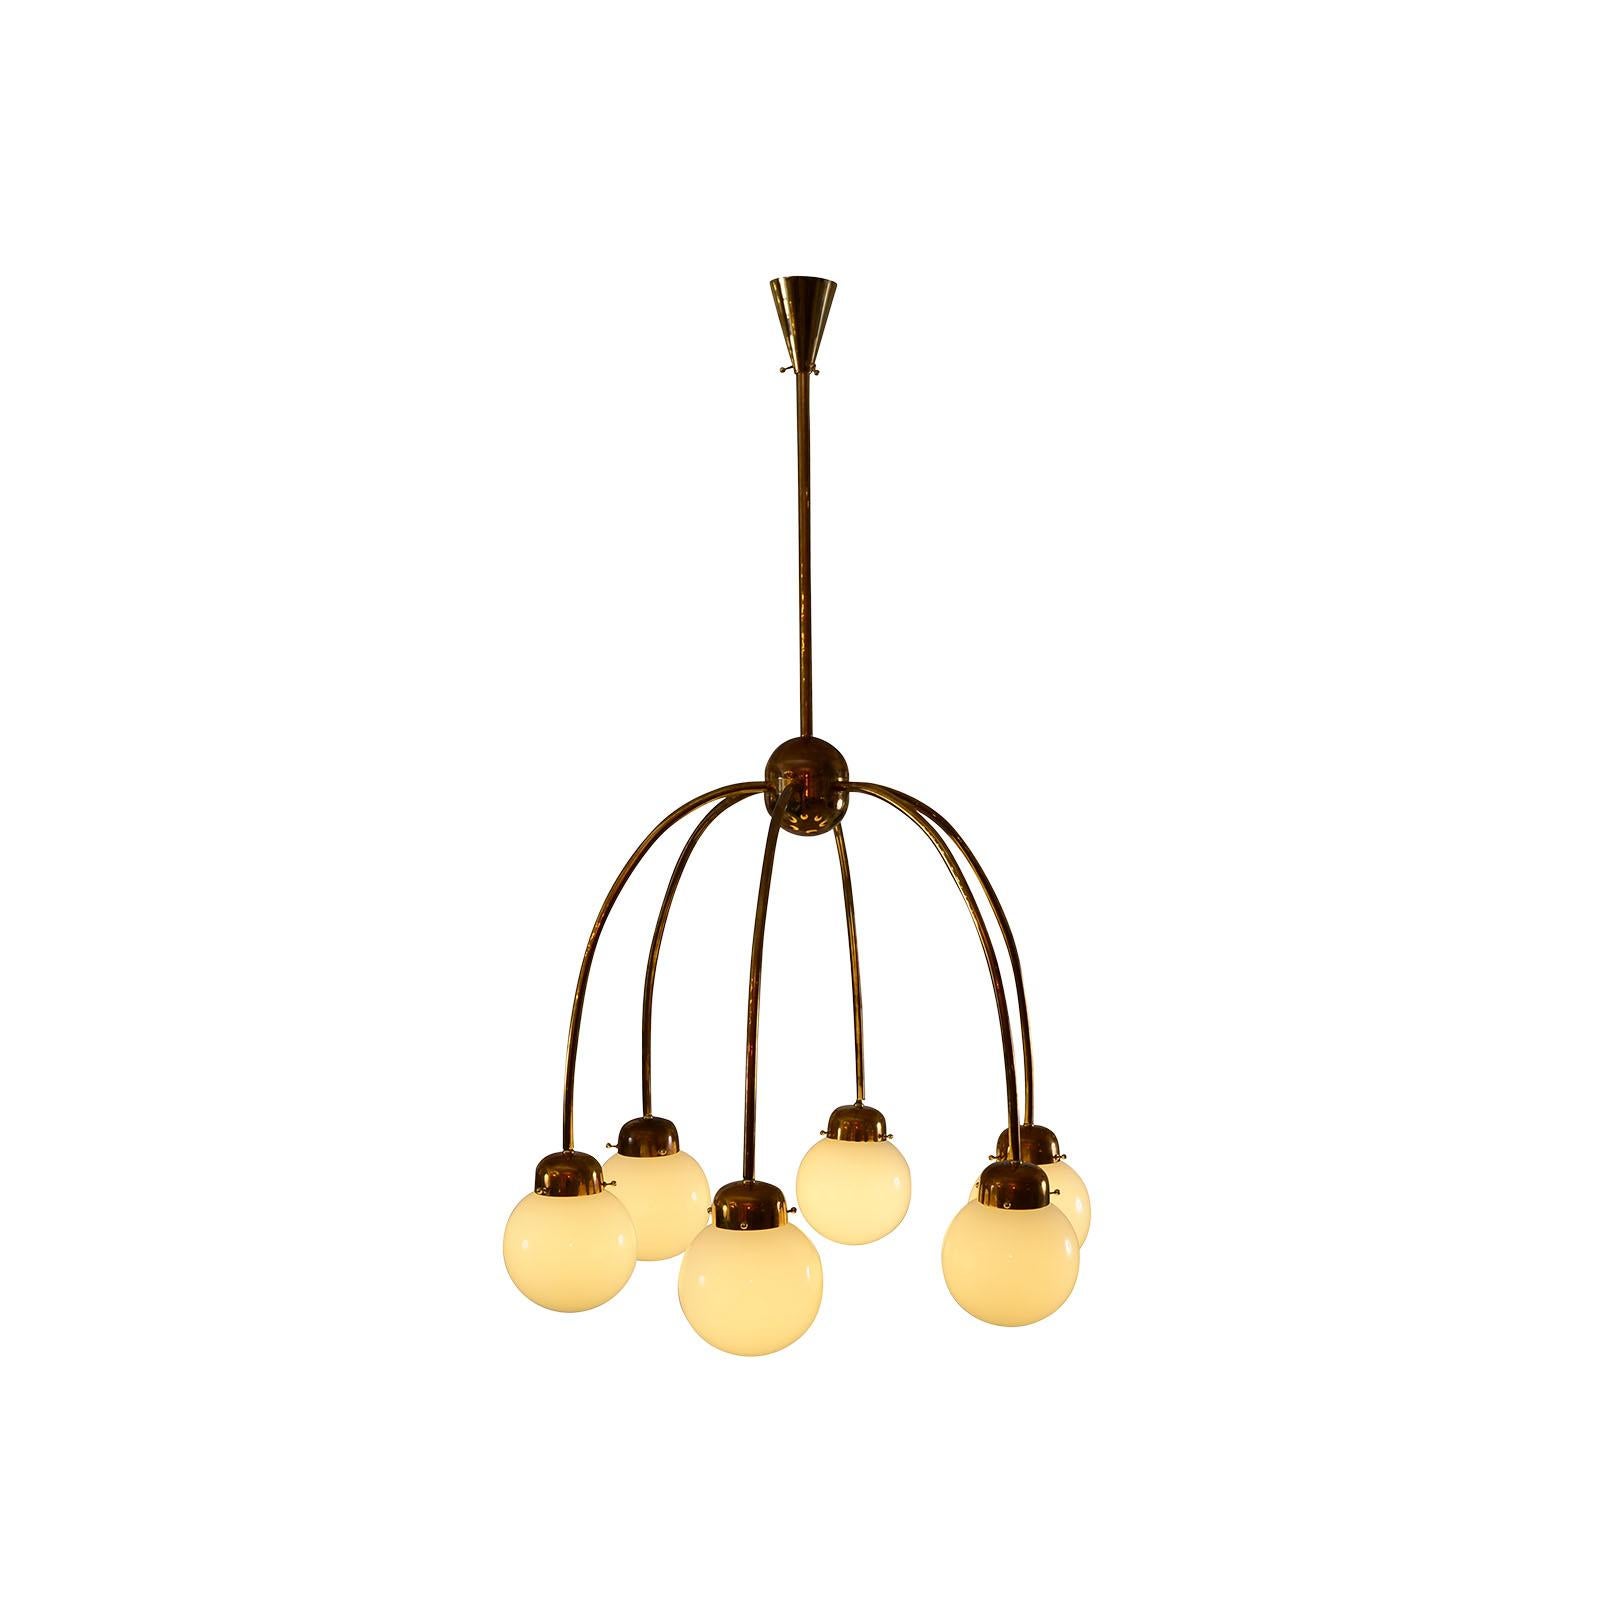 Josef Hoffmann for Wiener Werkstaette Art Deco Ceiling Lamp, Re-Edition For Sale 2